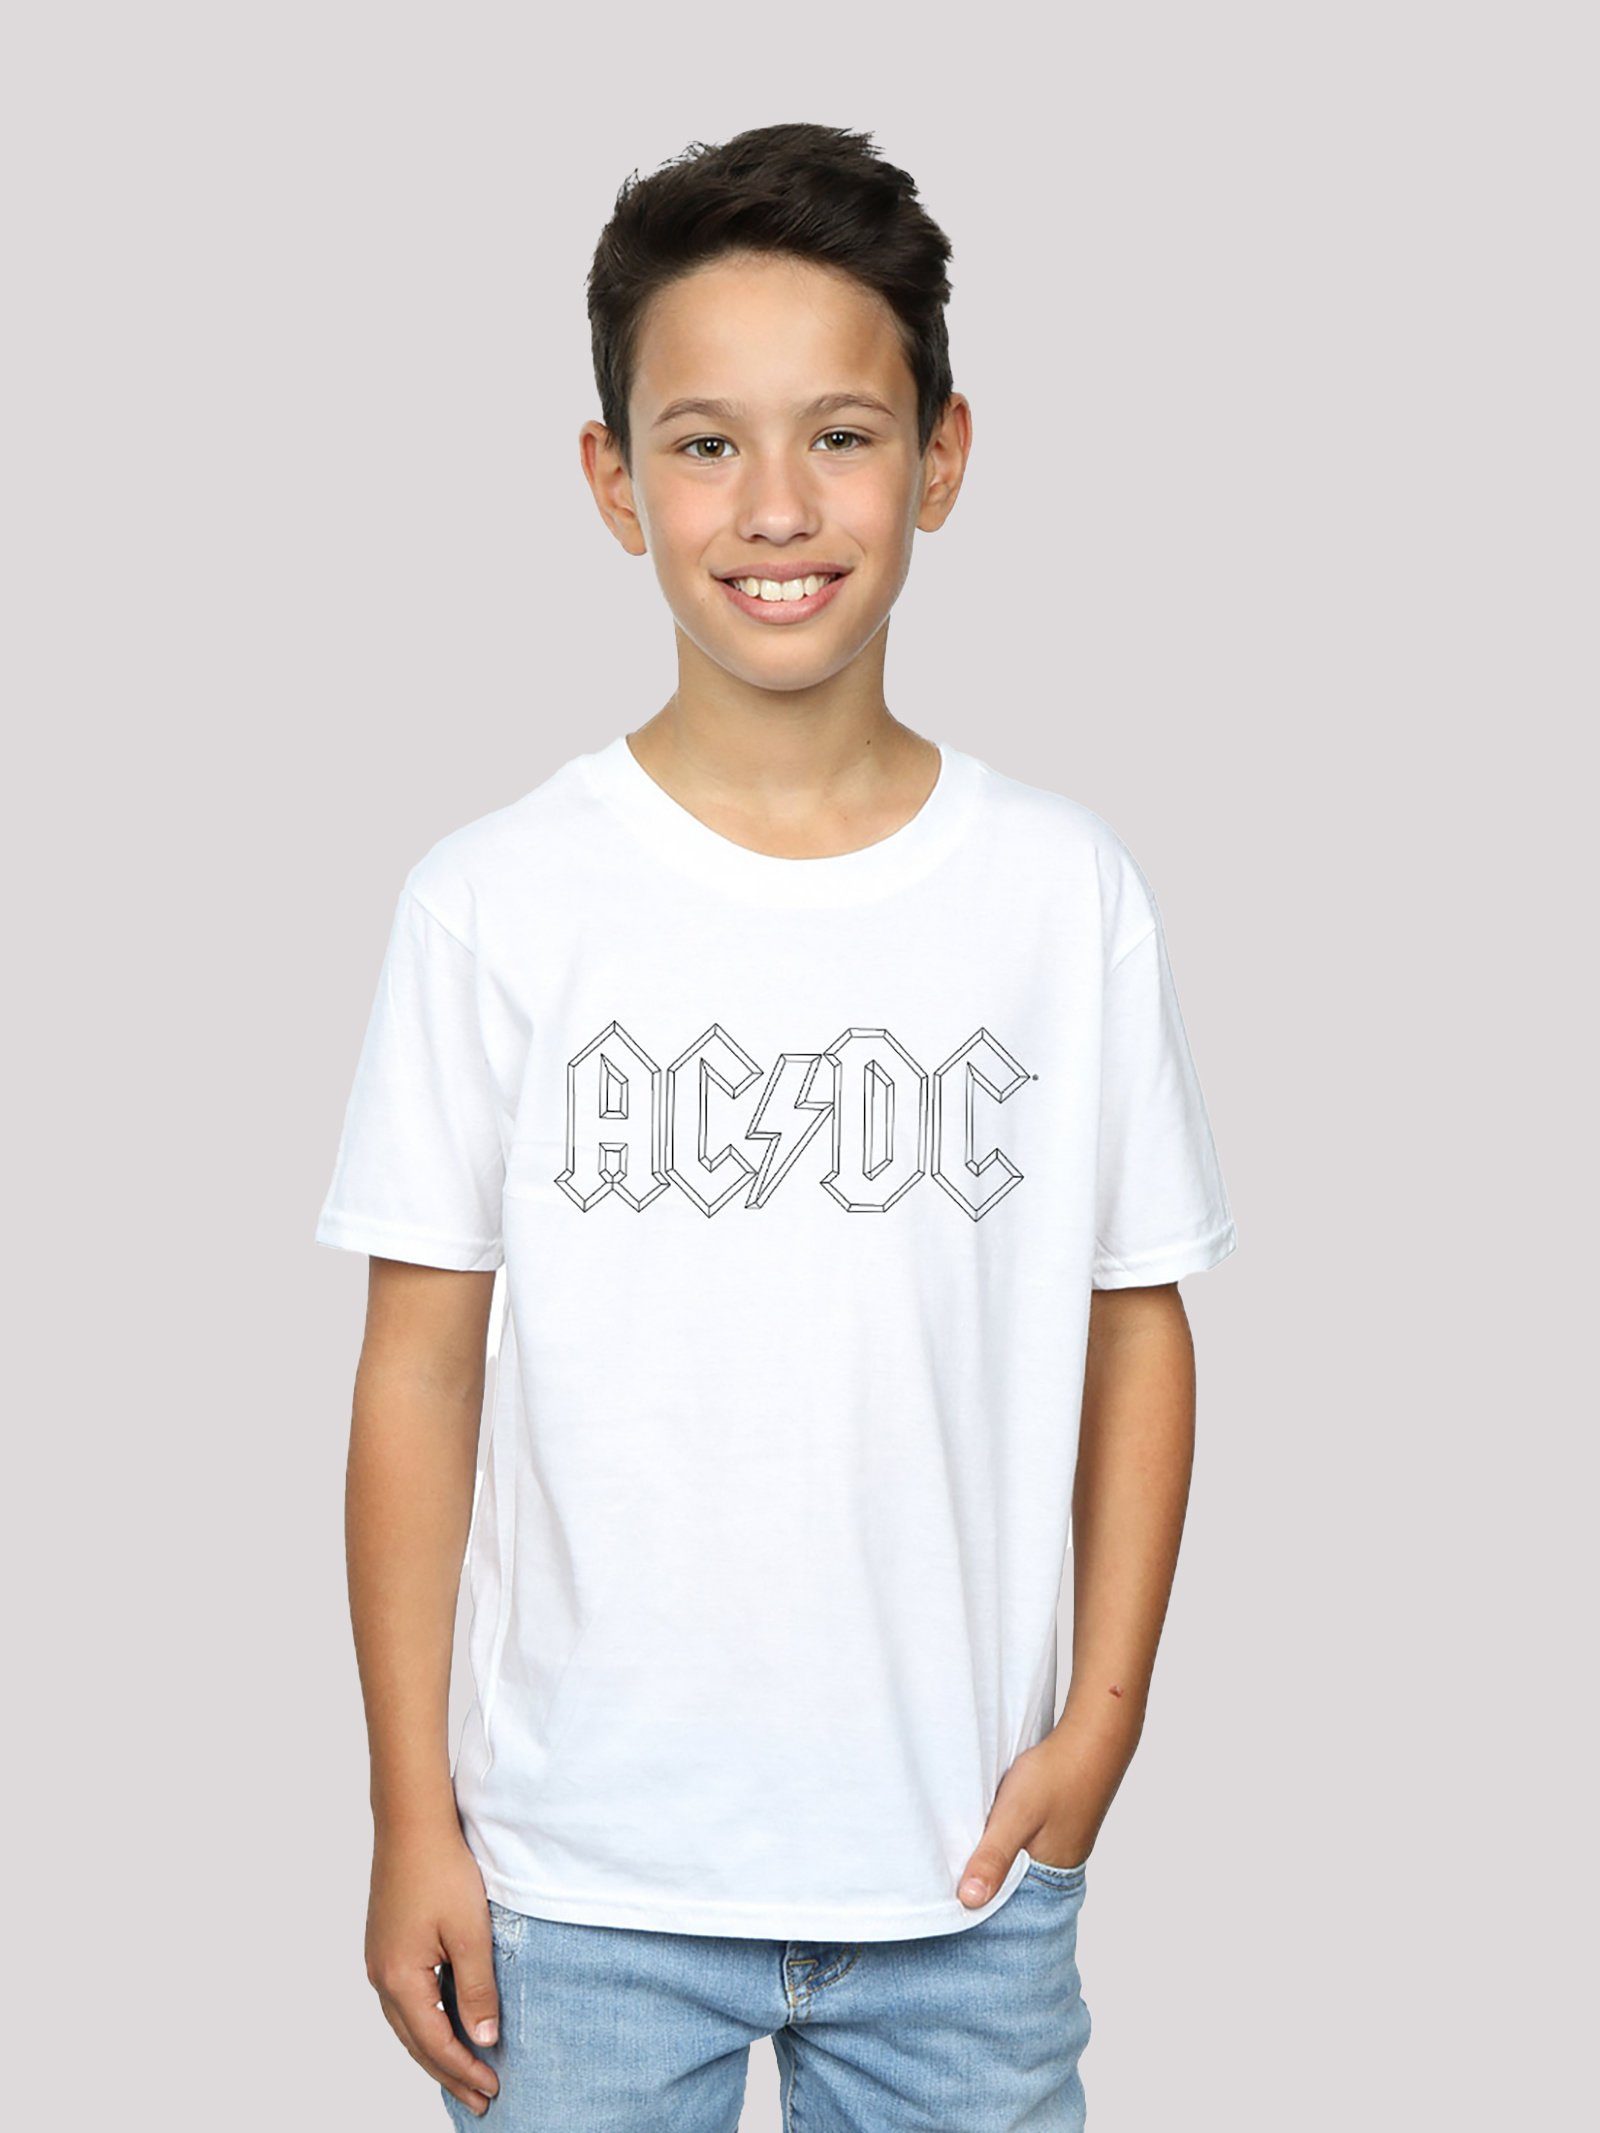 F4NT4STIC T-Shirt ACDC Black Outline Logo - Premium Rock Metal Musik Fan Merch Unisex Kinder,Premium Merch,Jungen,Mädchen,Bandshirt